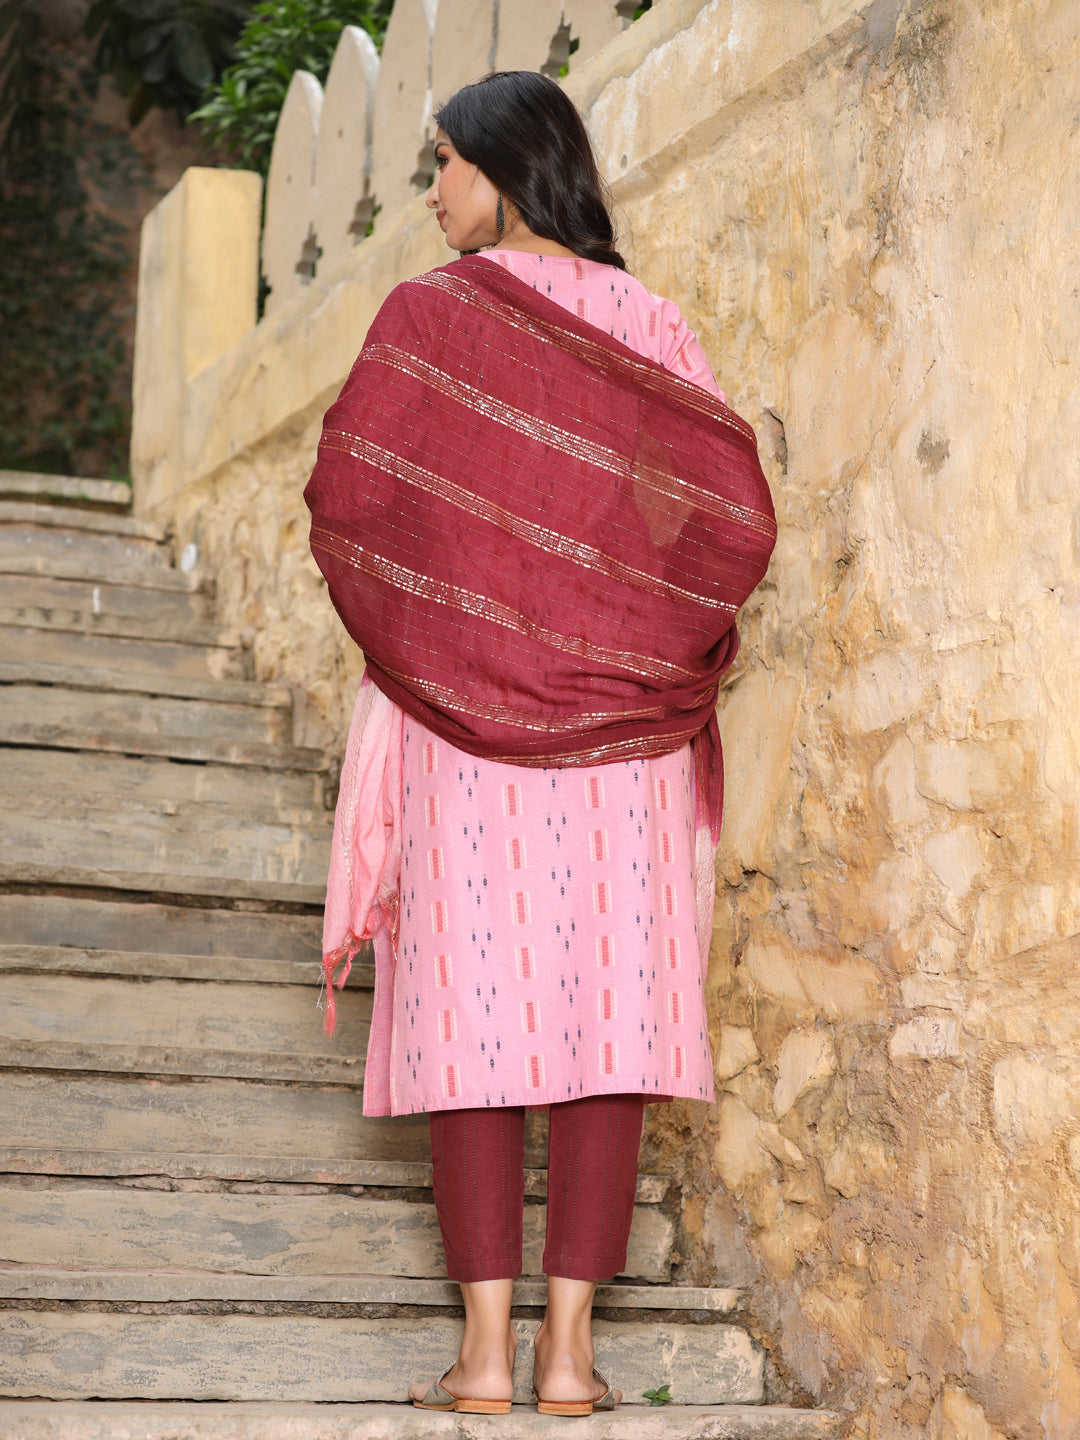 Pink And Burgandy Mirror Work Self Weave Kurta With Pants And Chanderi Dupatta